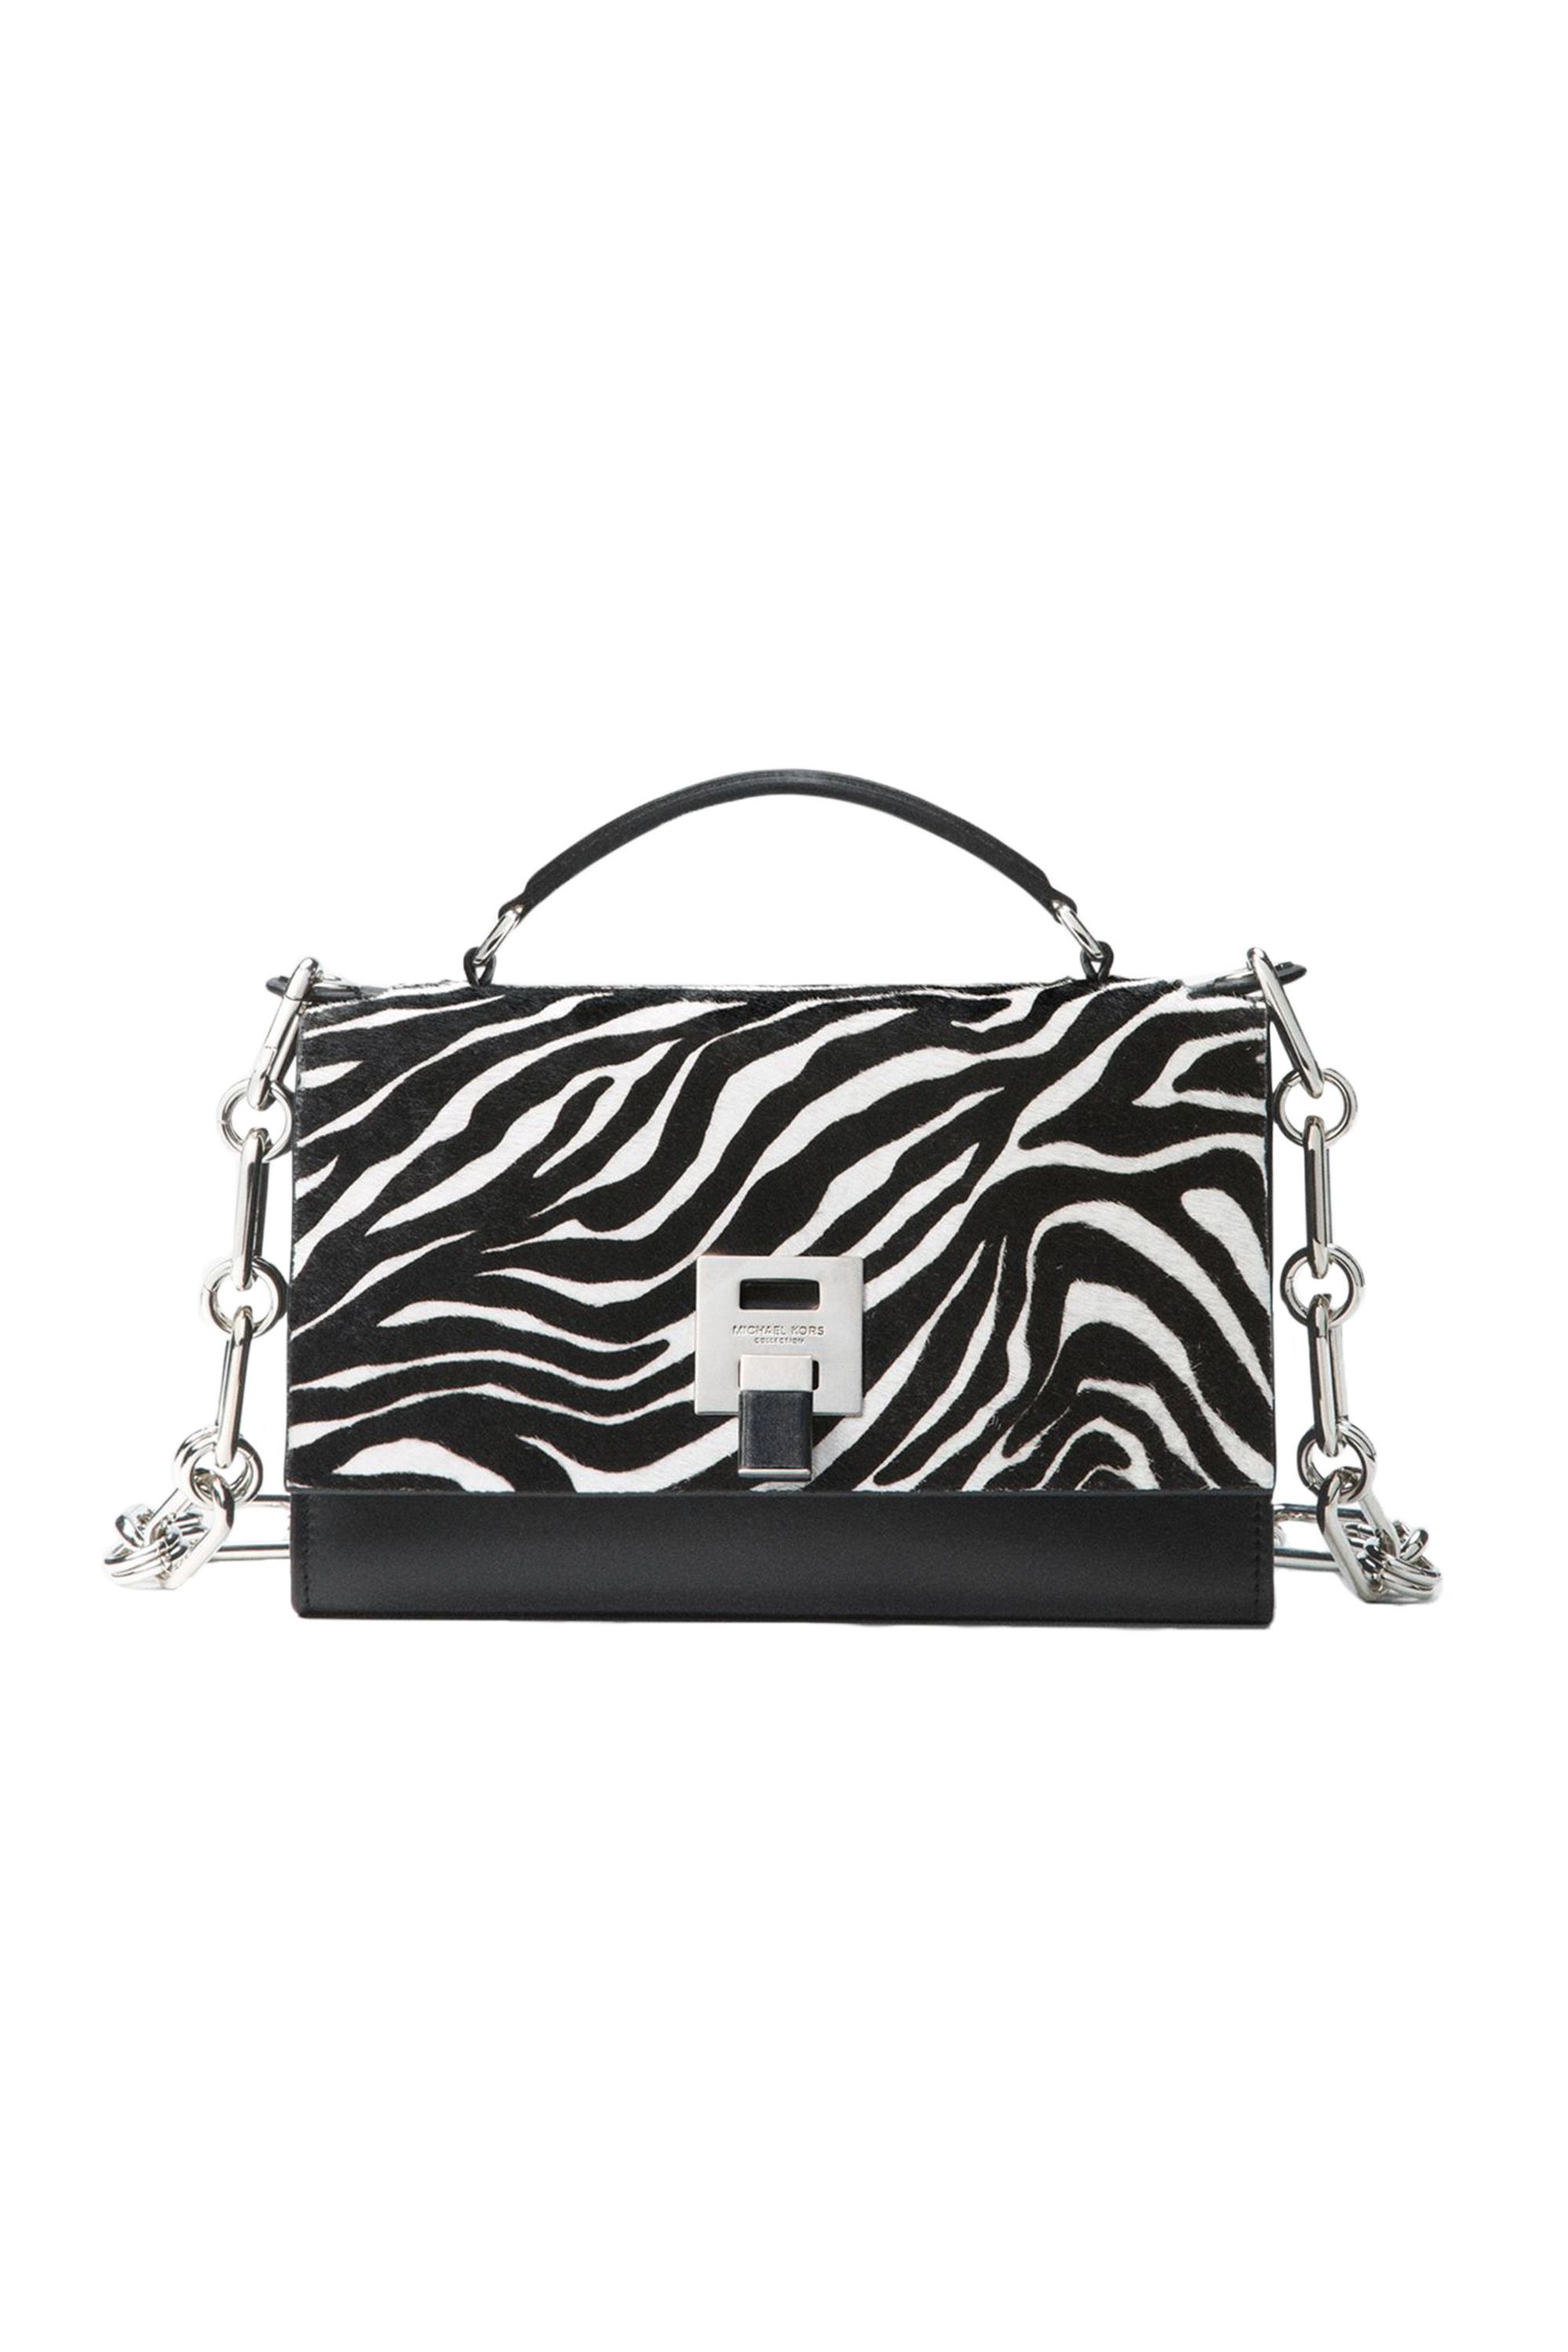 H&M Purse Black Zebra Girls Bag NEW NWT 